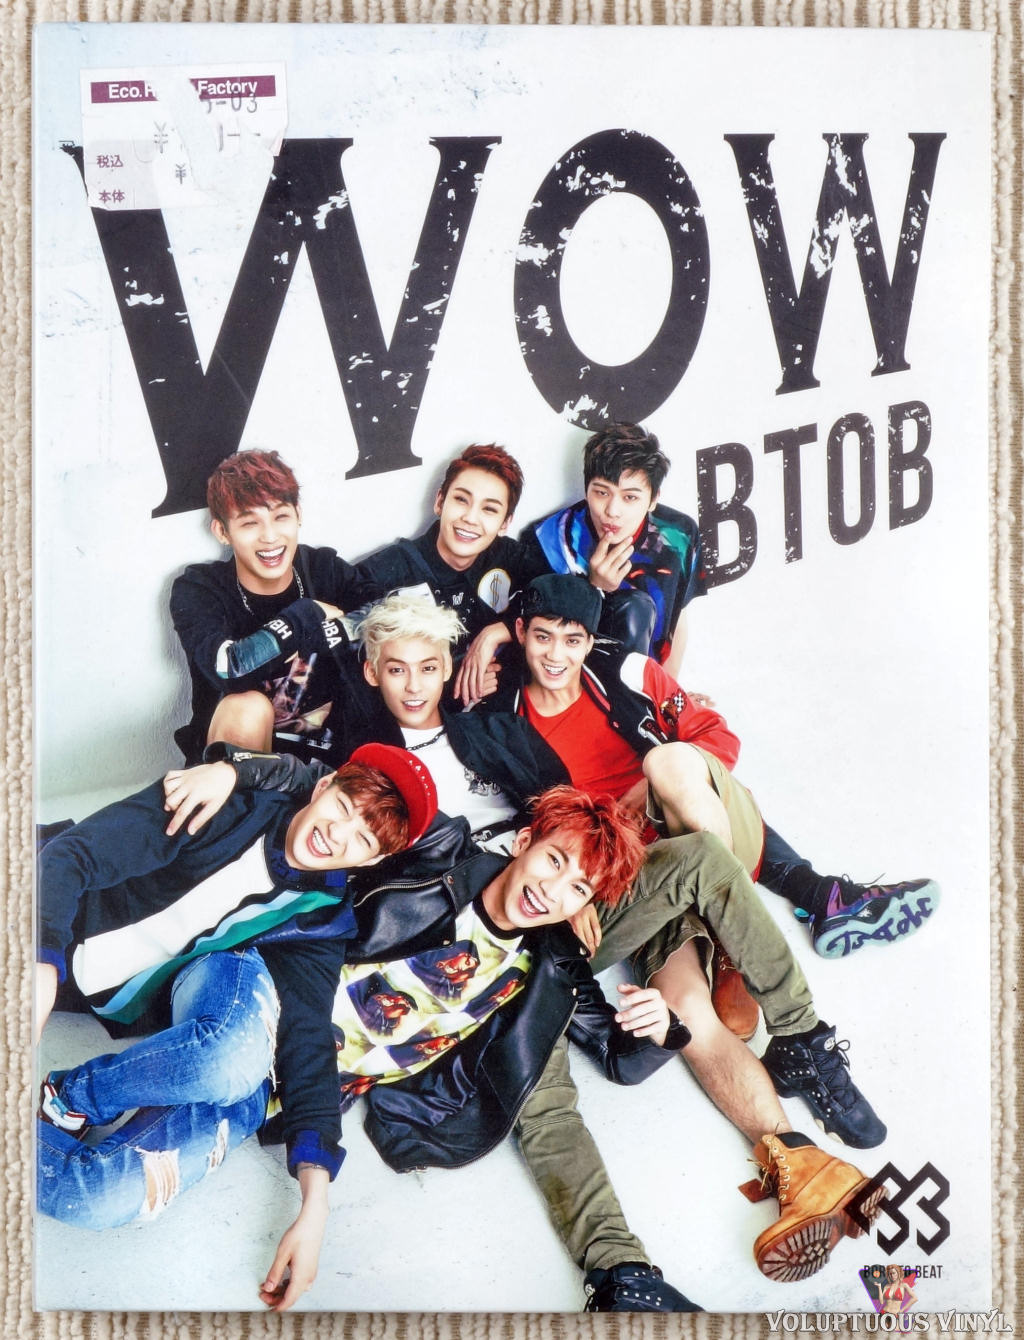 BTOB – Wow (2014) CD, Single, DVD, Limited Edition – Voluptuous